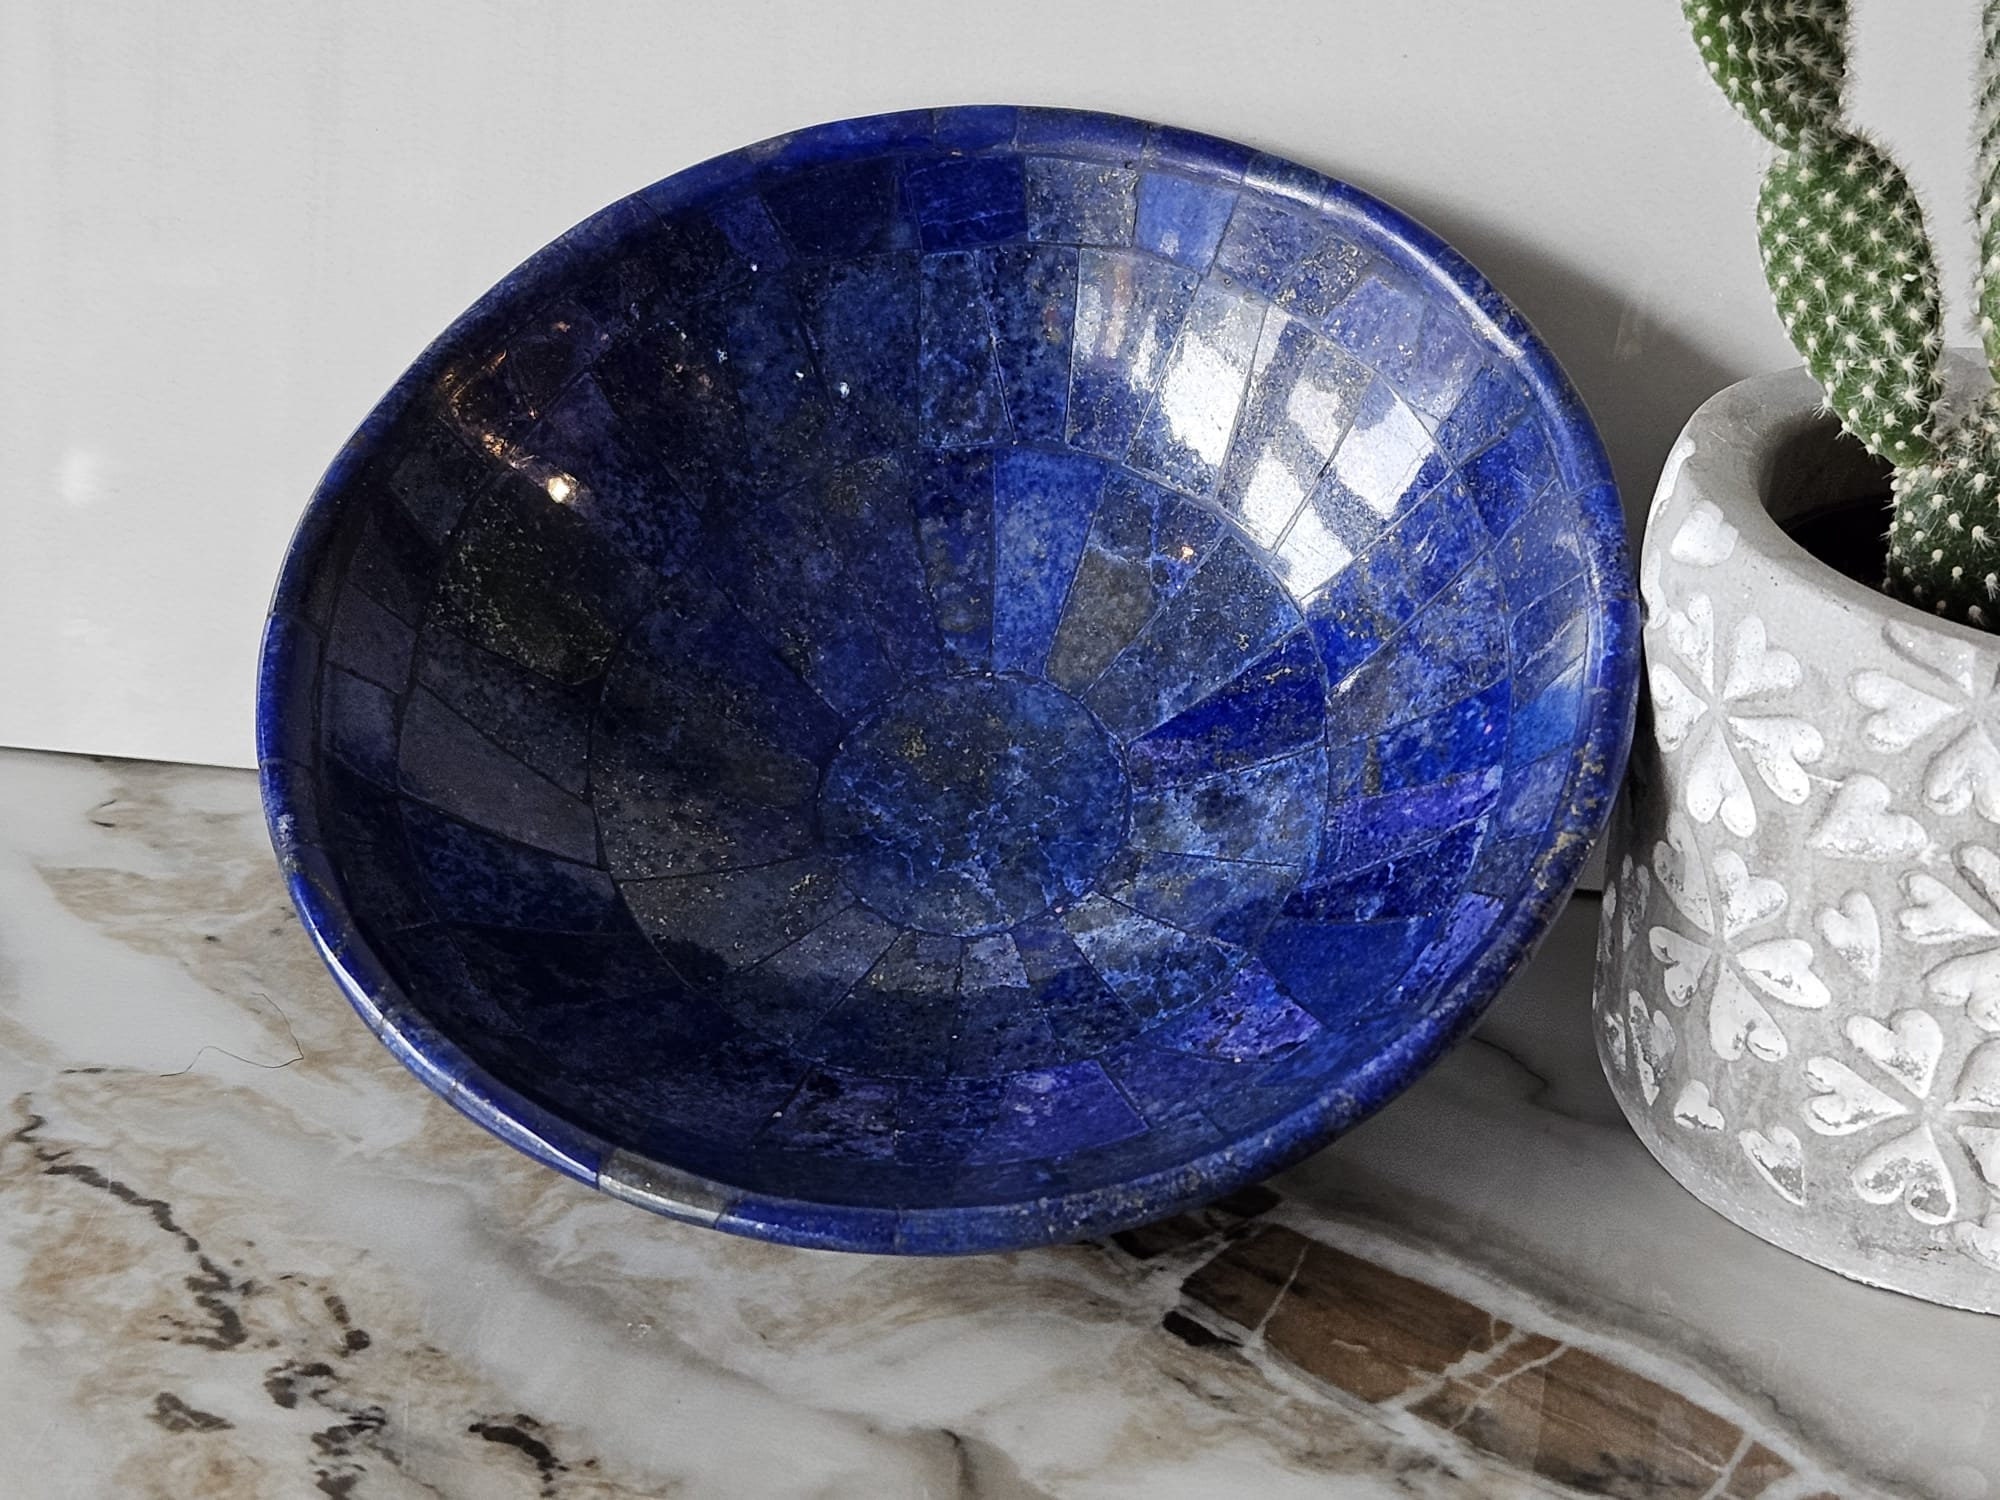 12 Cm Hand Crafted Lapis Lazuli Bowl Ovel Shape Stunning Royal Blue Color Handmade bowl from Badakhshsan Afghanistan